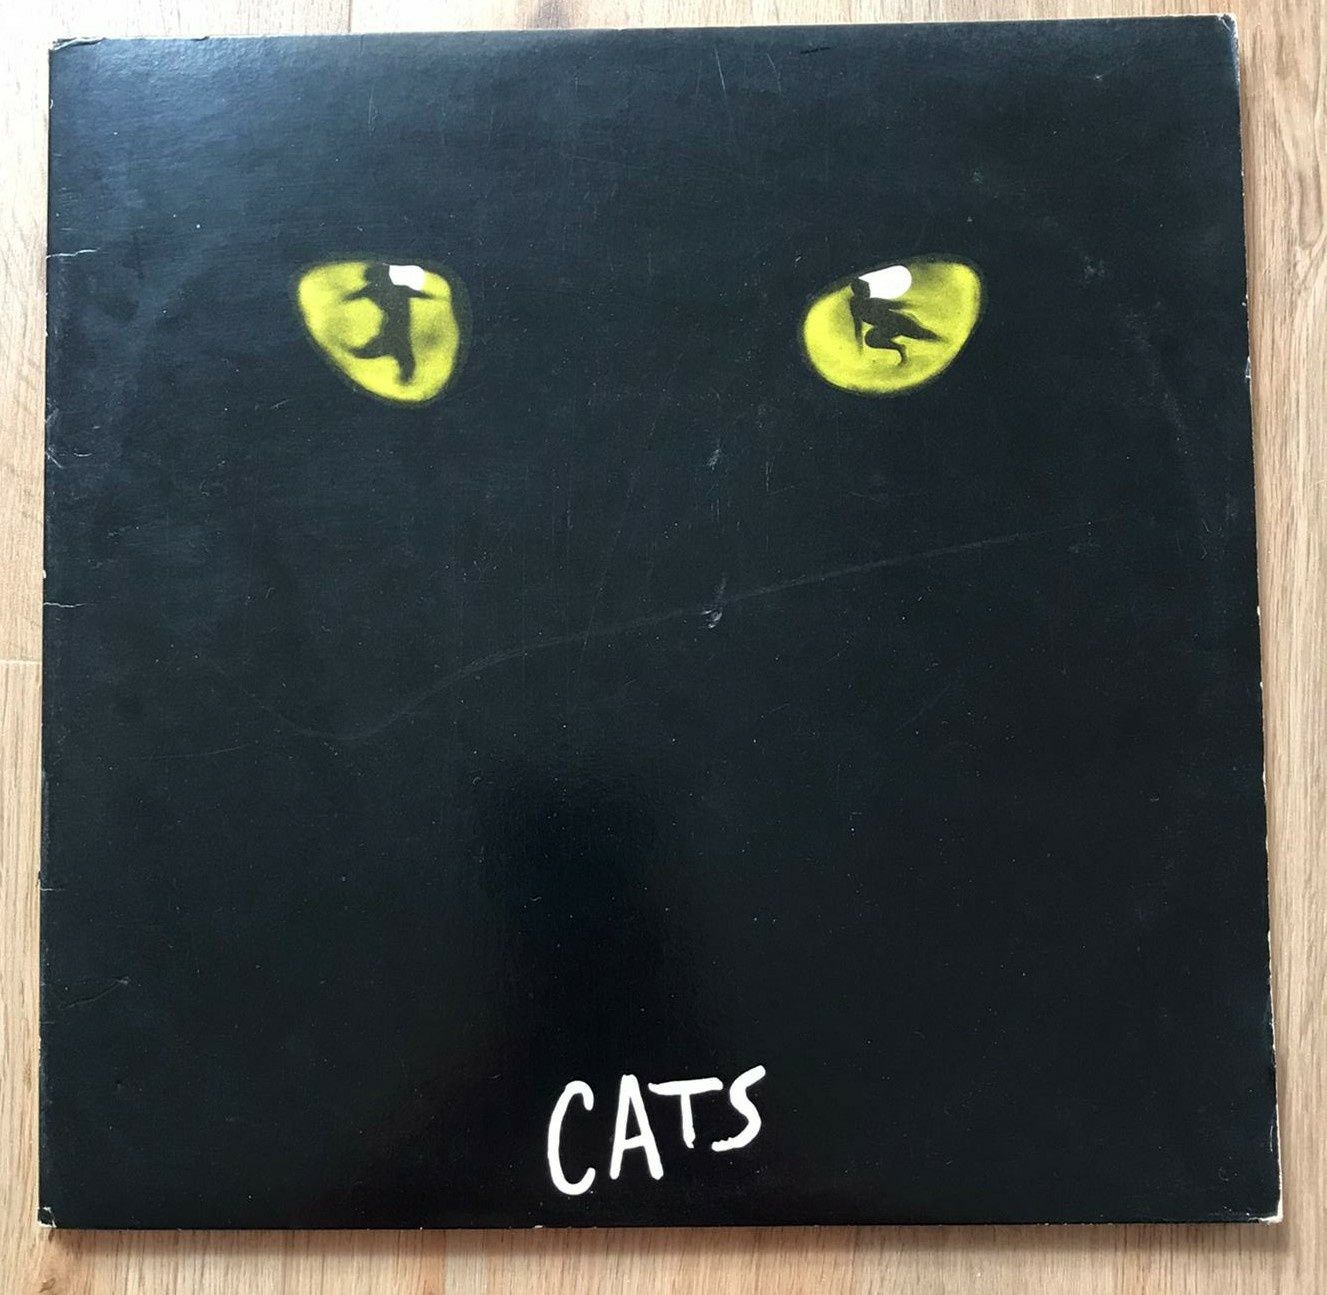 Andrew Lloyd Webber. - Album CATS - duplo LP